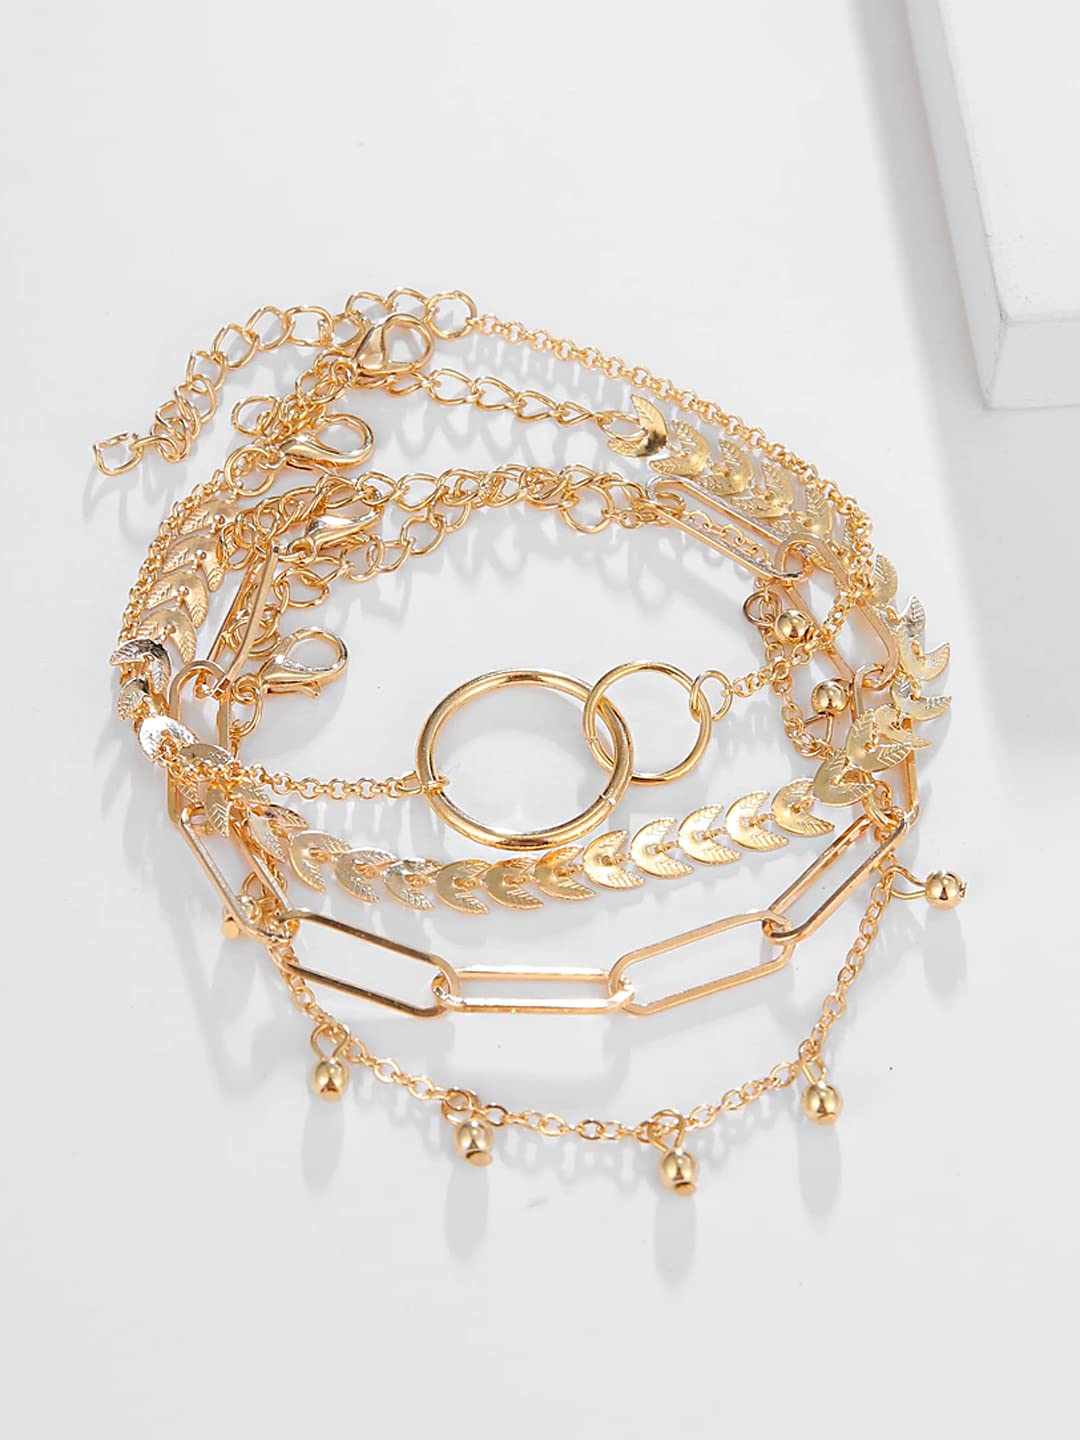 6 pcs Gold Bracelet Set, Dainty Bracelets for Women, Pearl Bracelet,  Bridesmaid | eBay